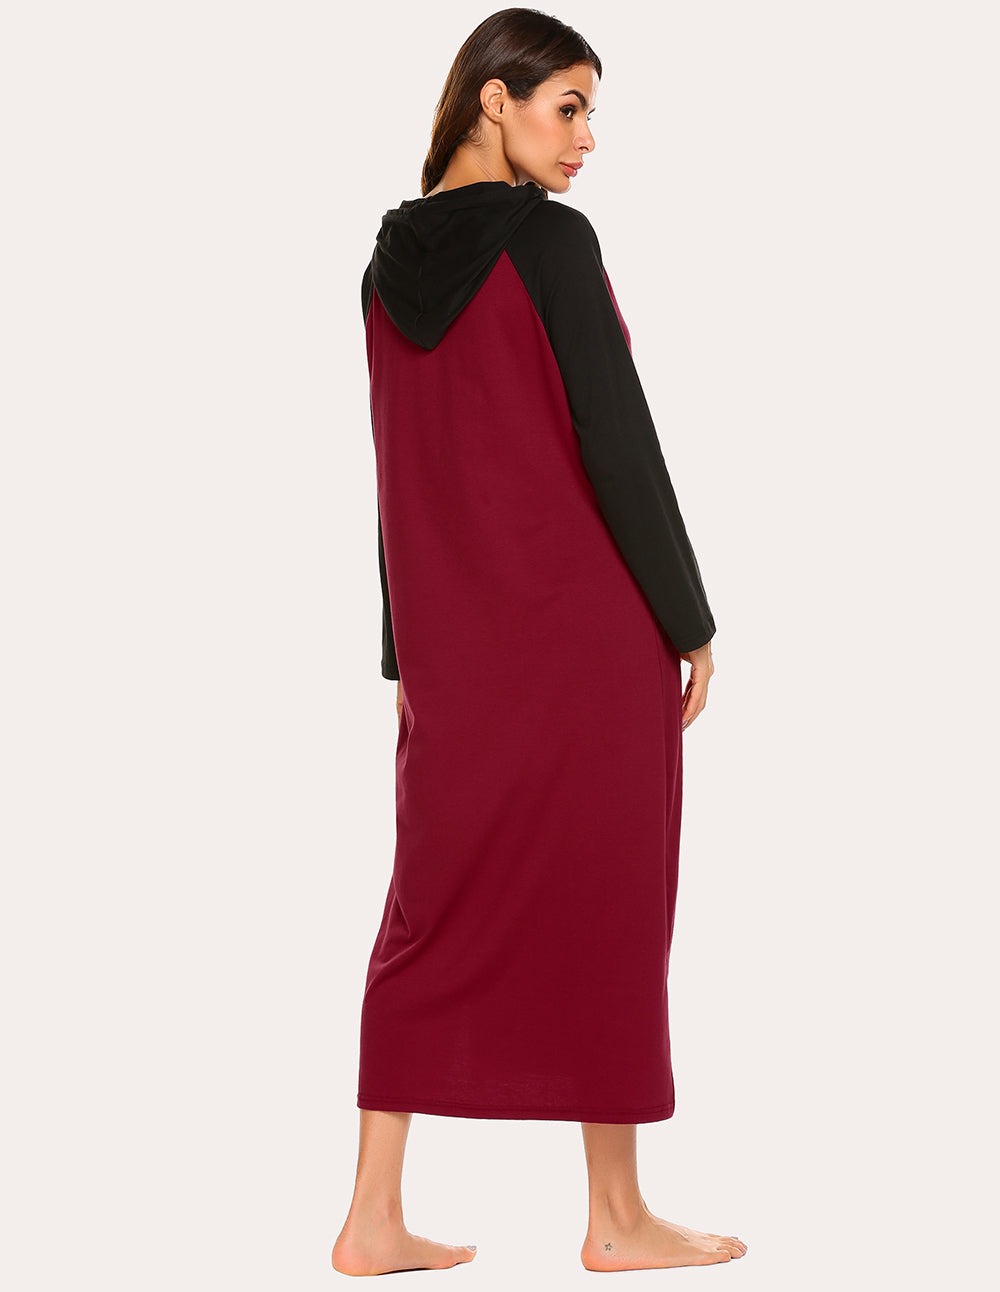 Ekouaer Contrast Color Hooded Nightdress